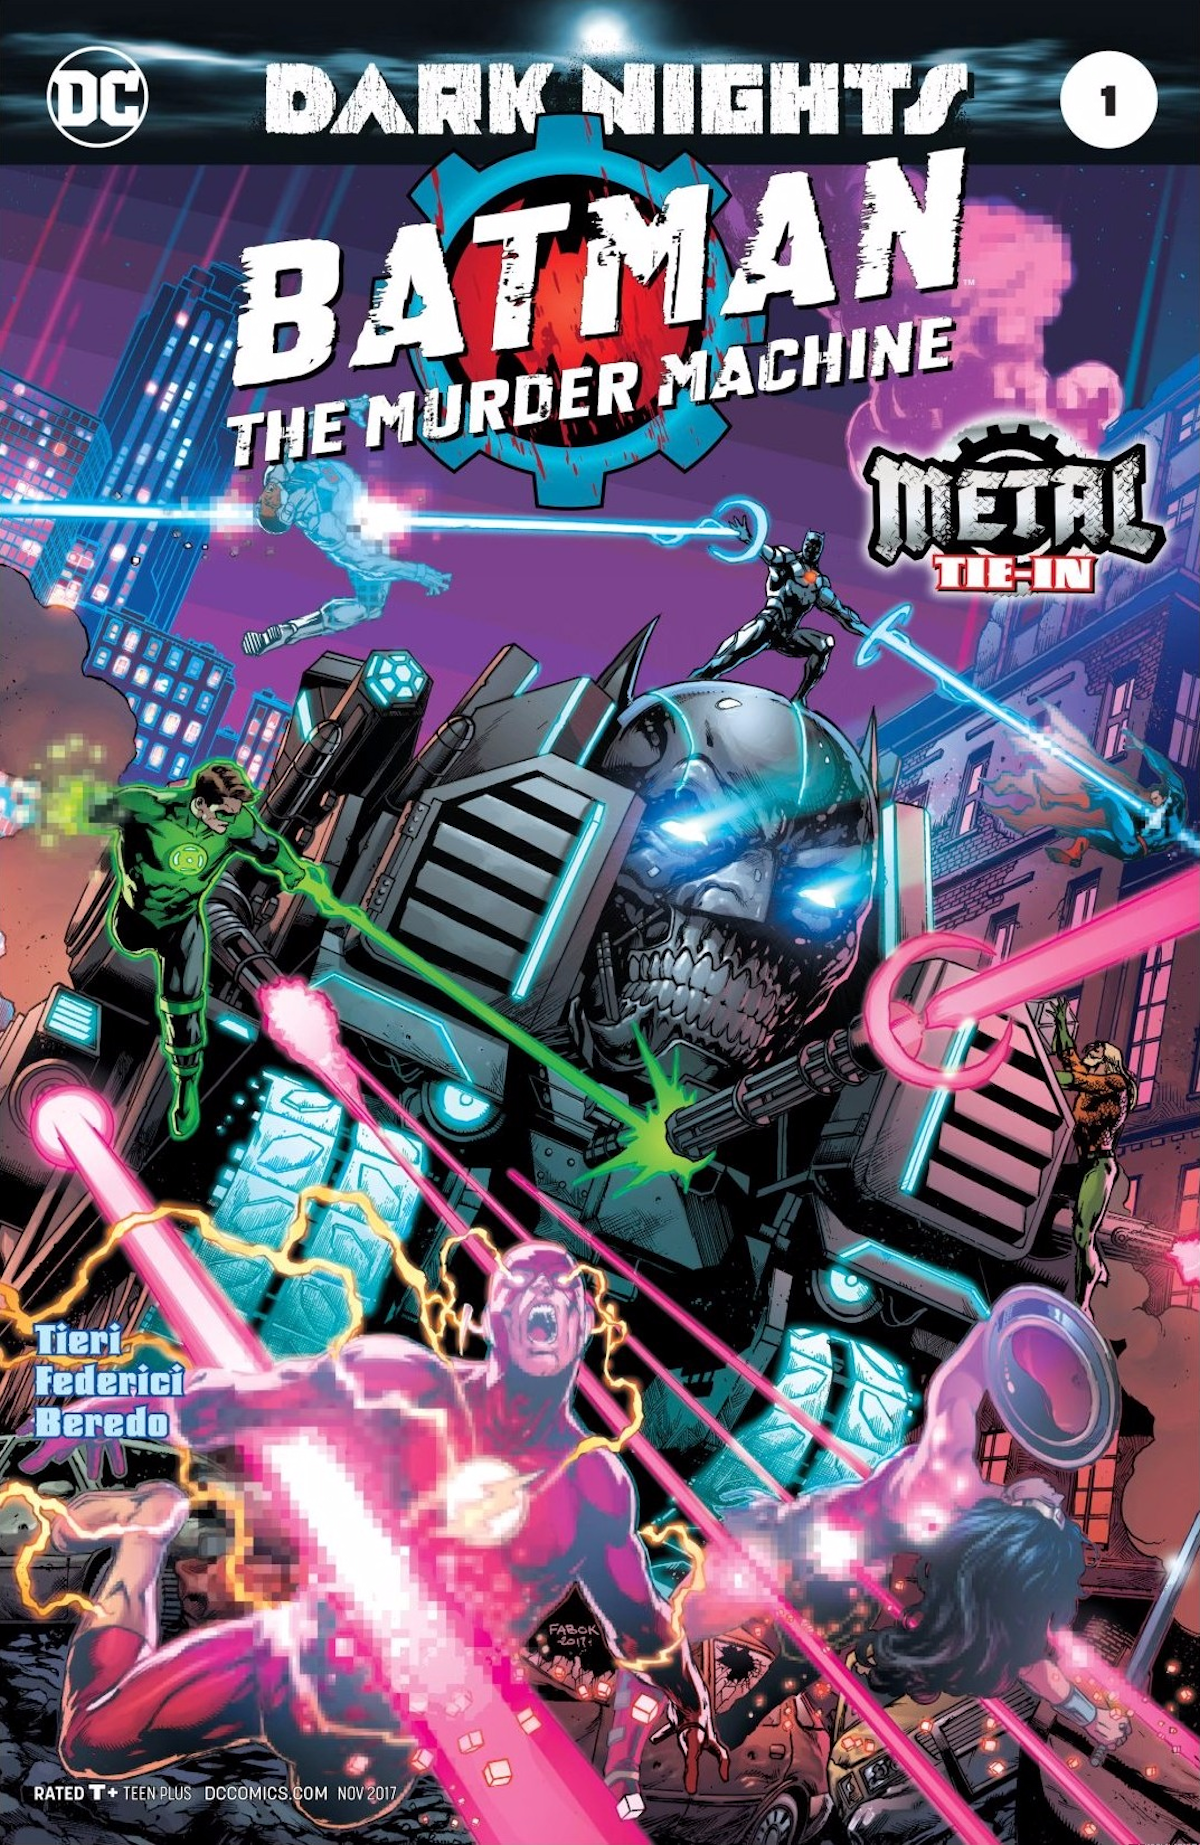 Batman: The Murder Machine 1 (Cover A)